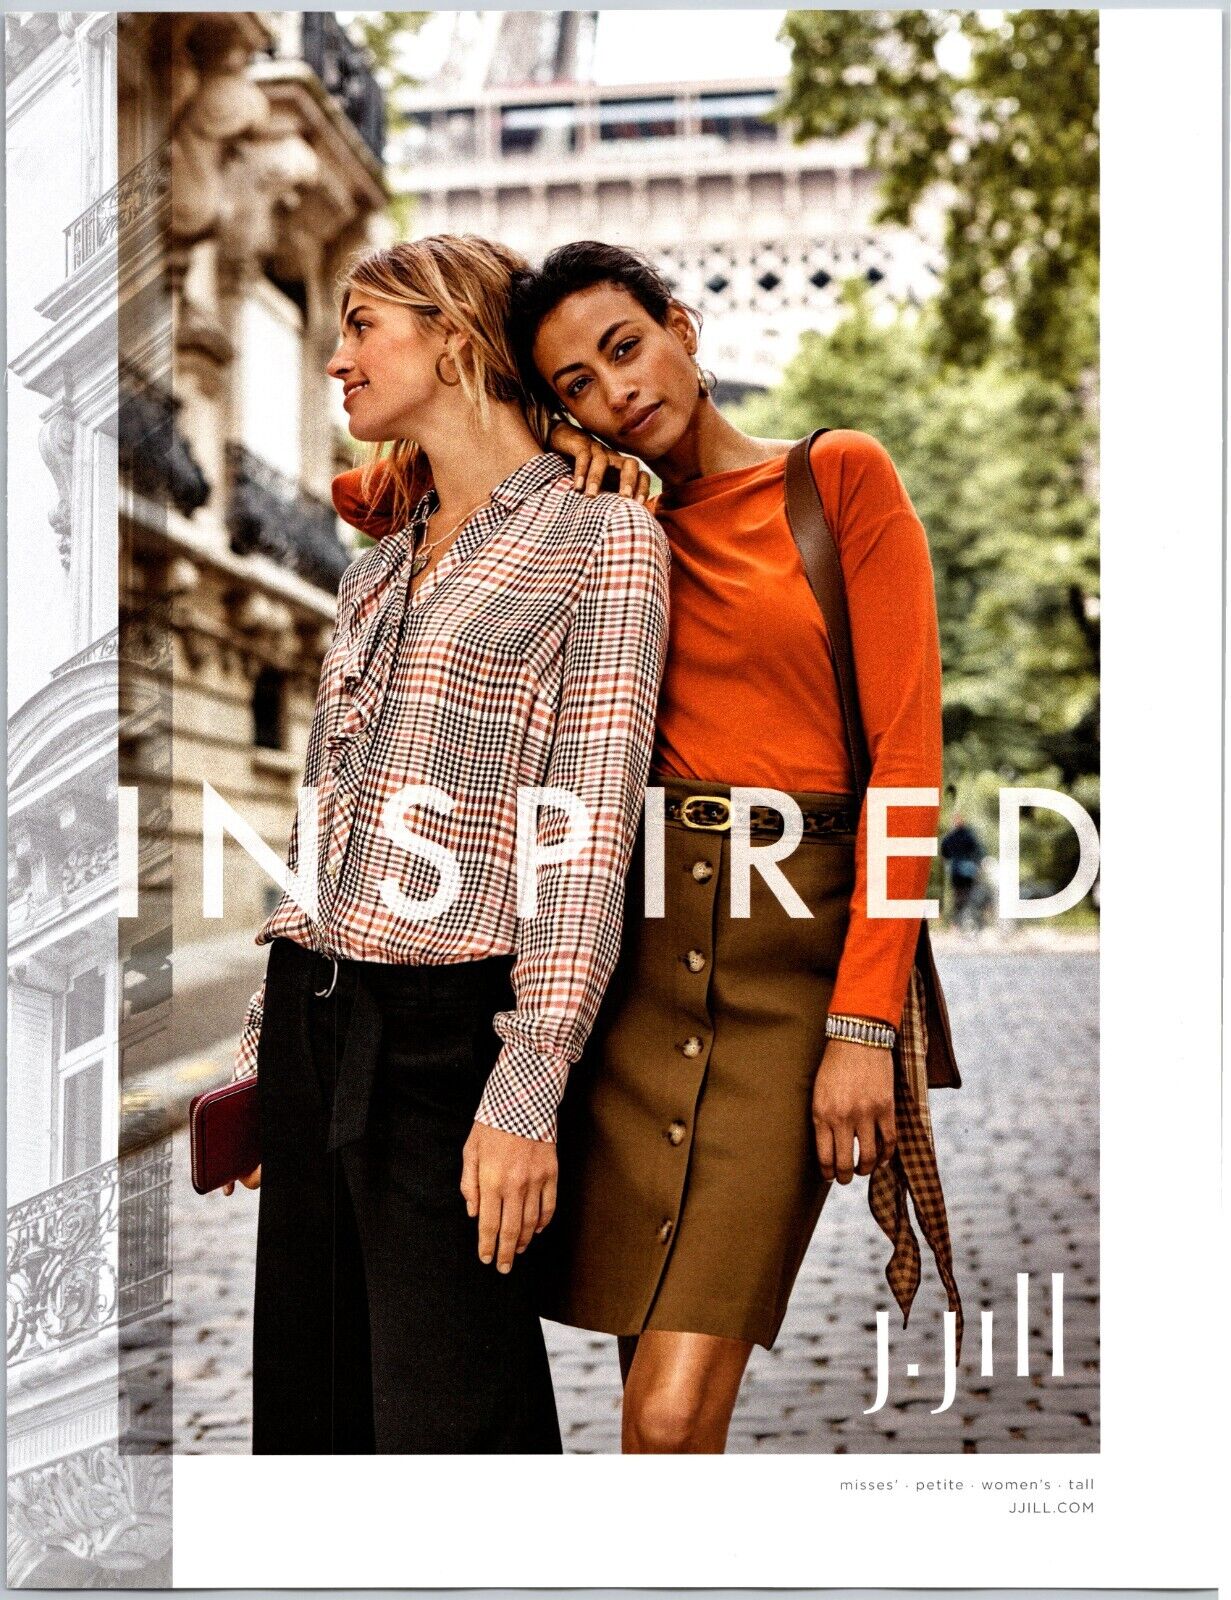 2019 J. Jill Women\'s Clothing Misses Petite Tall Inspired Print Ad